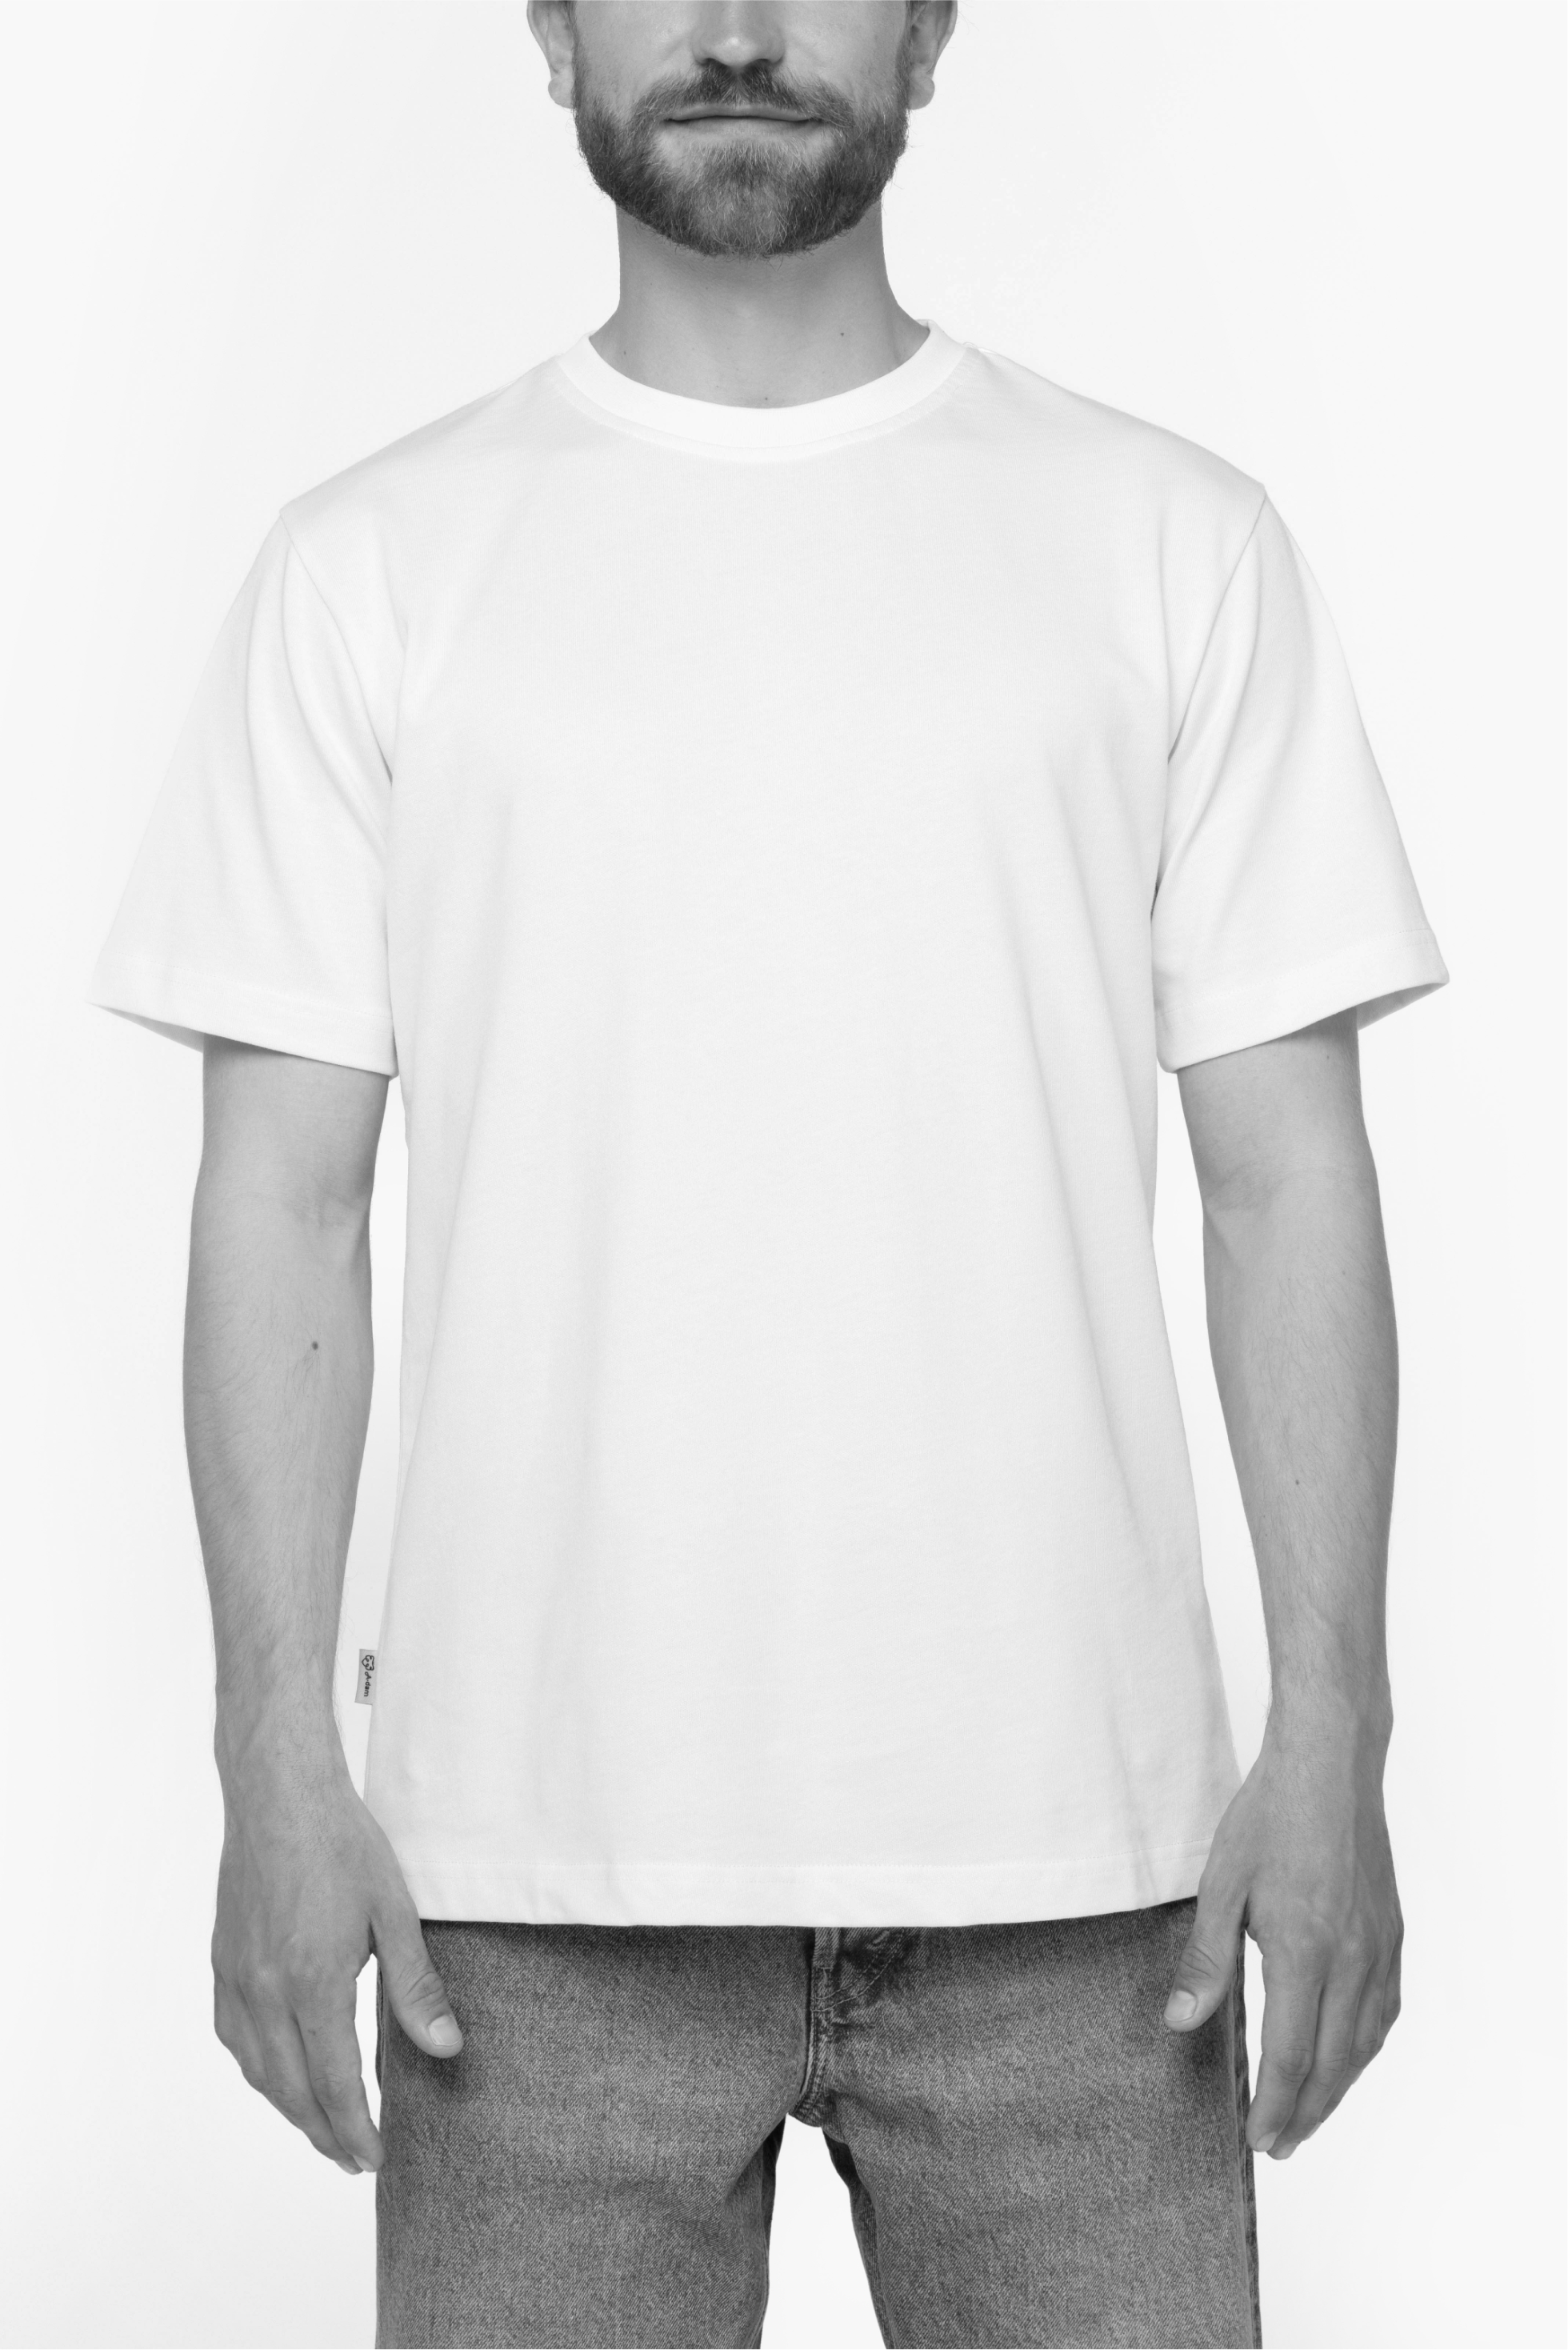 A-dam x Popeye organic White T-shirt with premium Popeye print | A-dam